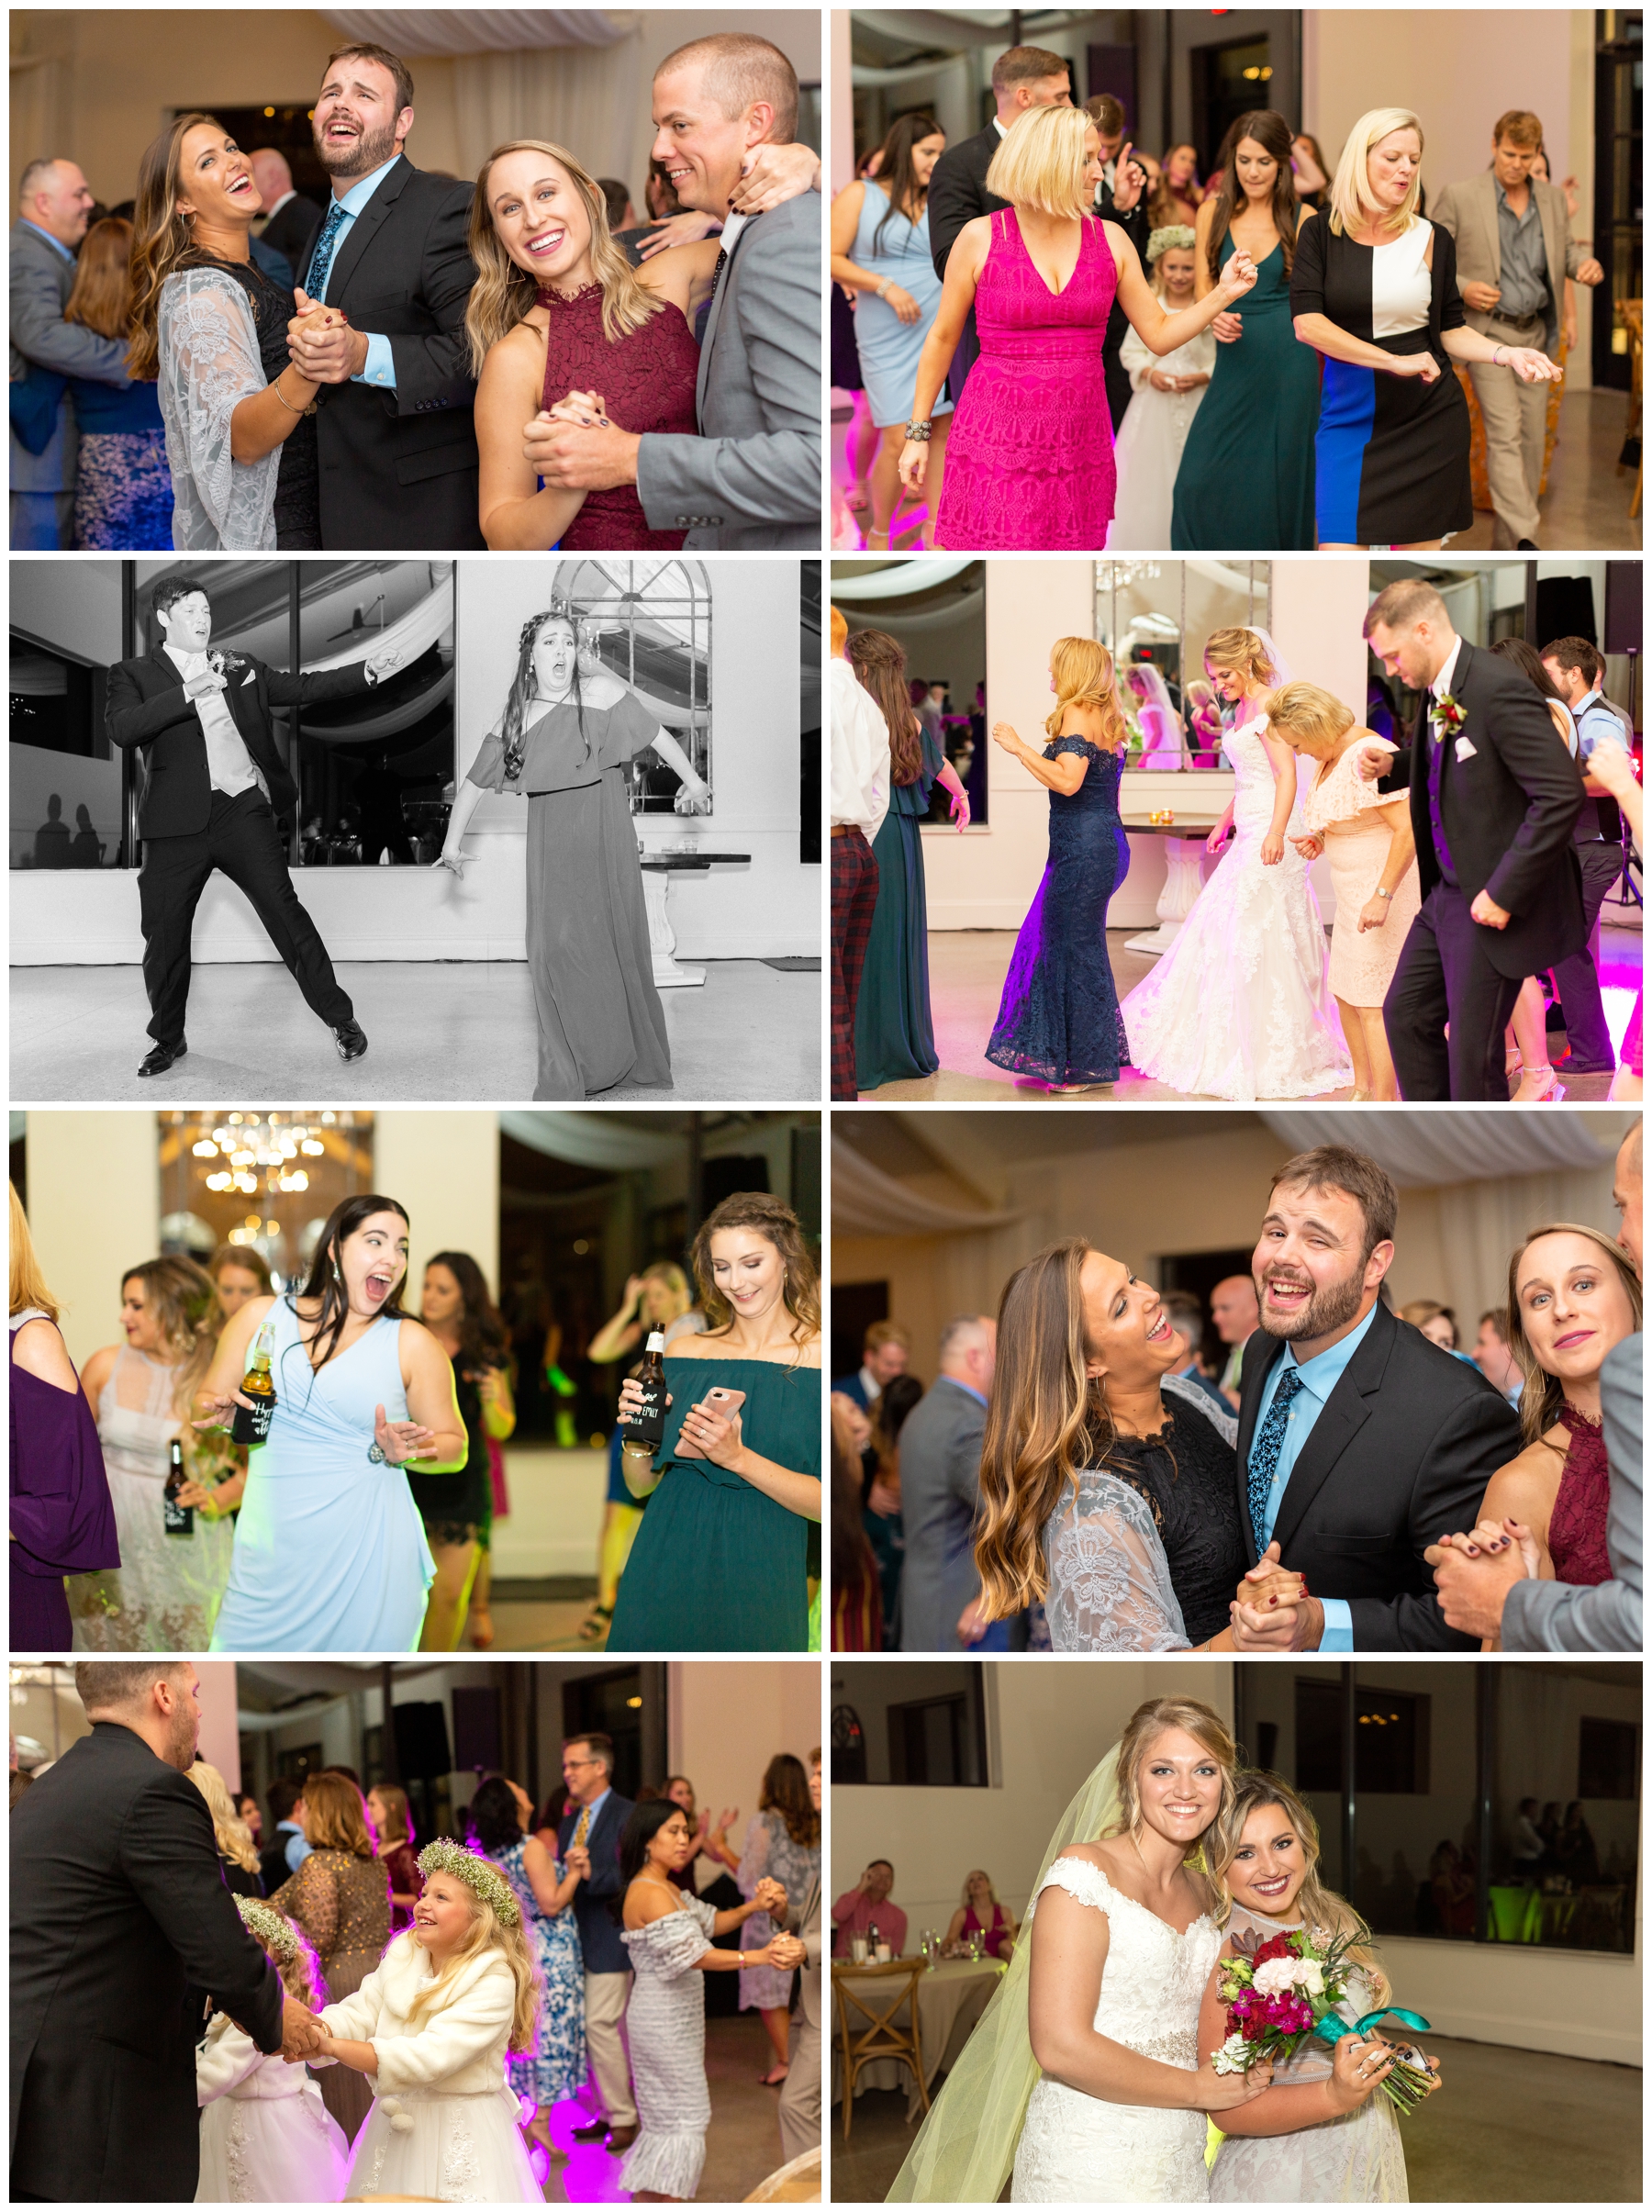 Atlanta_Georgia_Wedding_Photographer_Venue_Blog_Greystone Estate_Fall_Engaged_Bride and Groom_Reception_Dancing